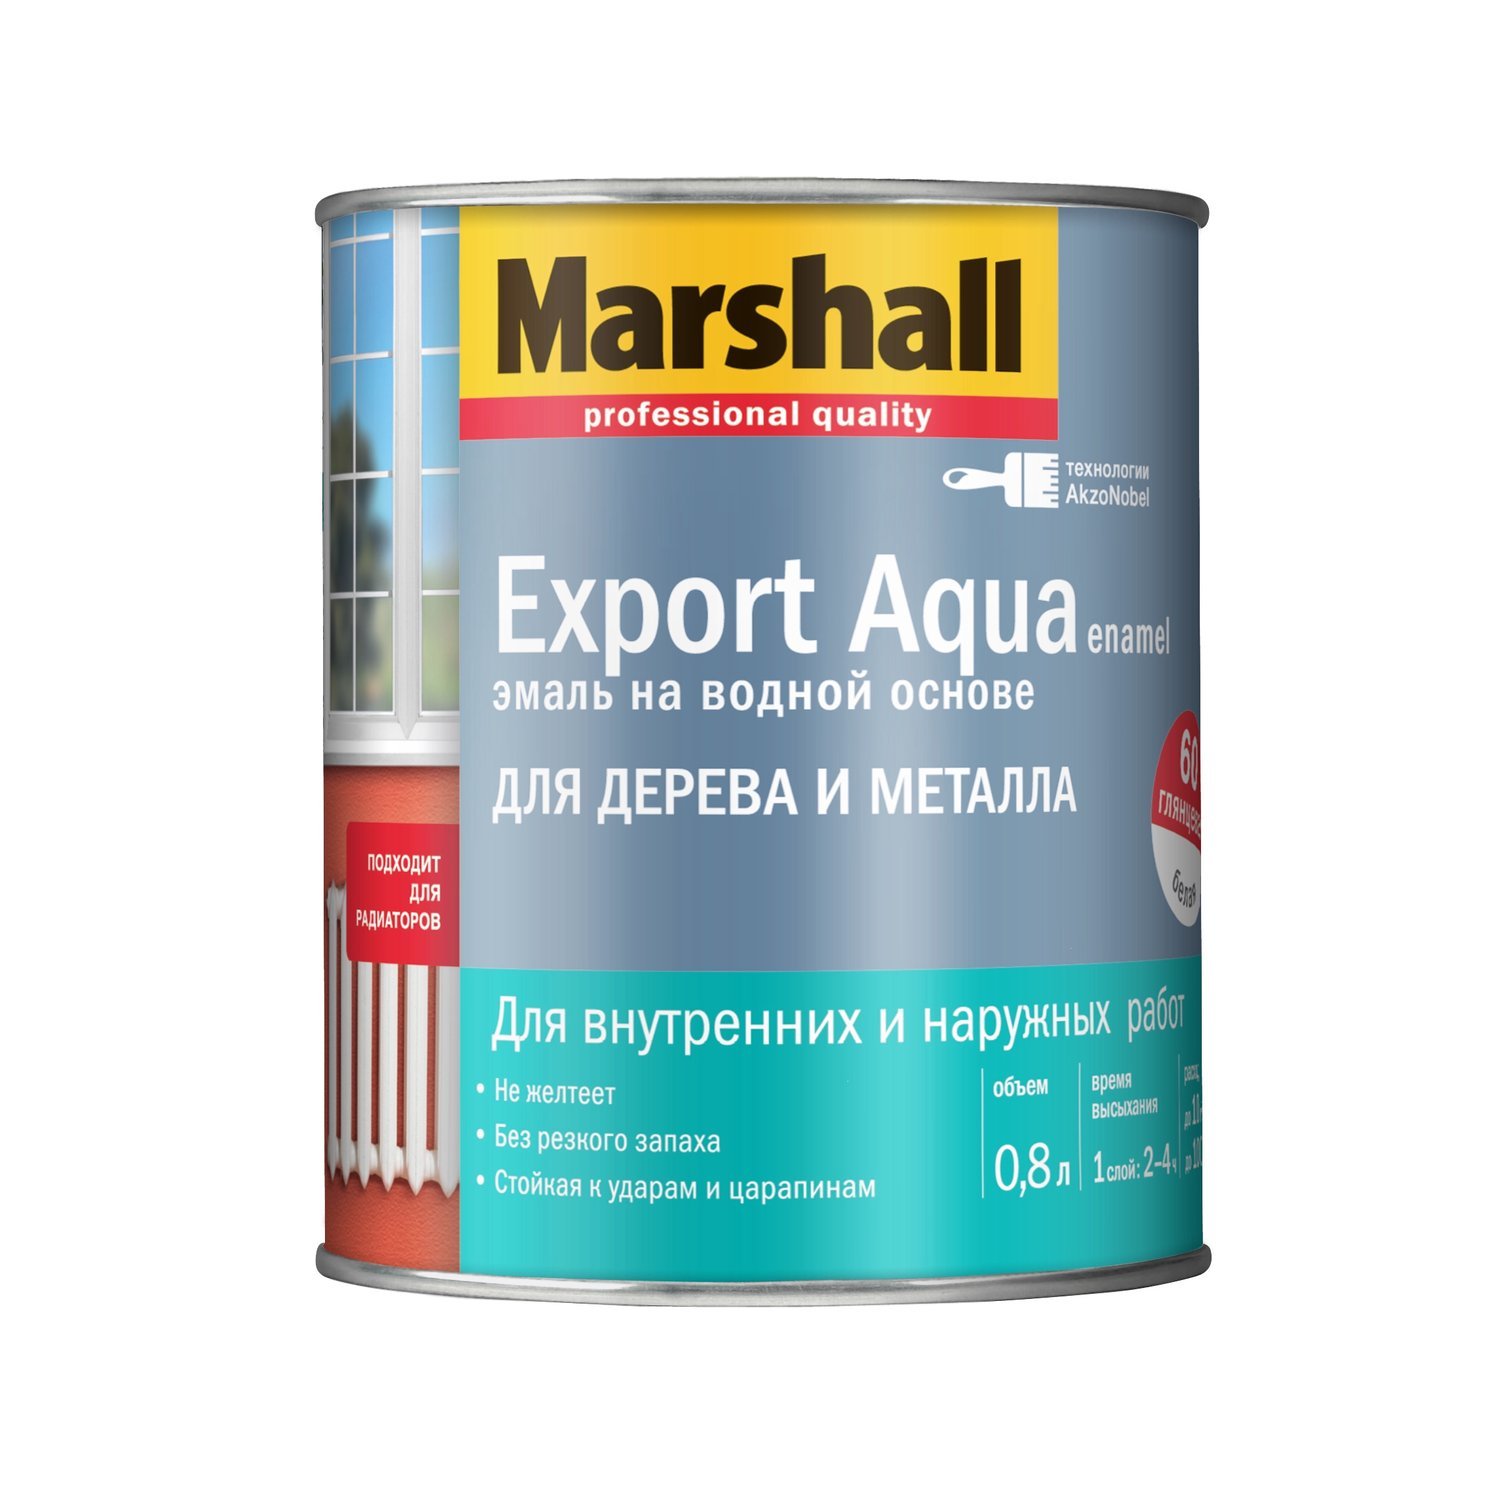 <span style="font-style: italic;">Эмаль на водной основе для дерева и металла белая глянцевая. Marshall Export Aqua</span><br>